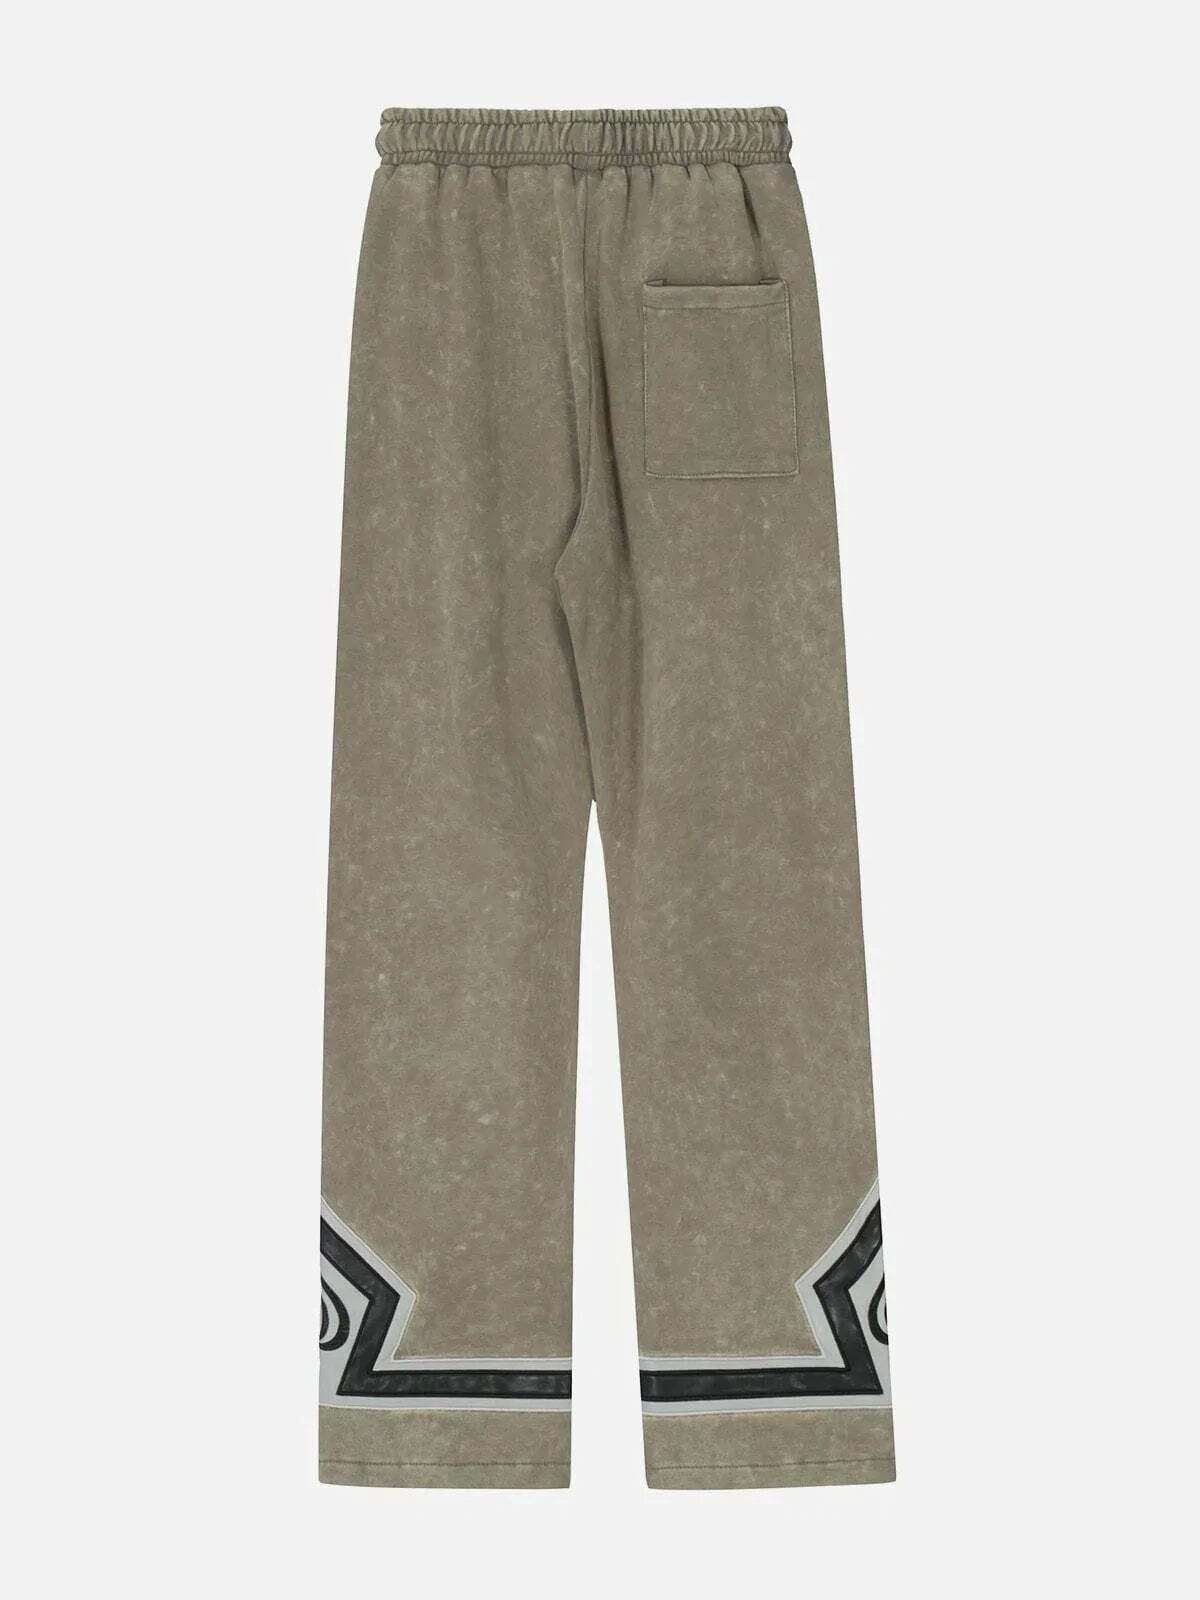 patchwork streetwear pants edgy urban fashion 8223